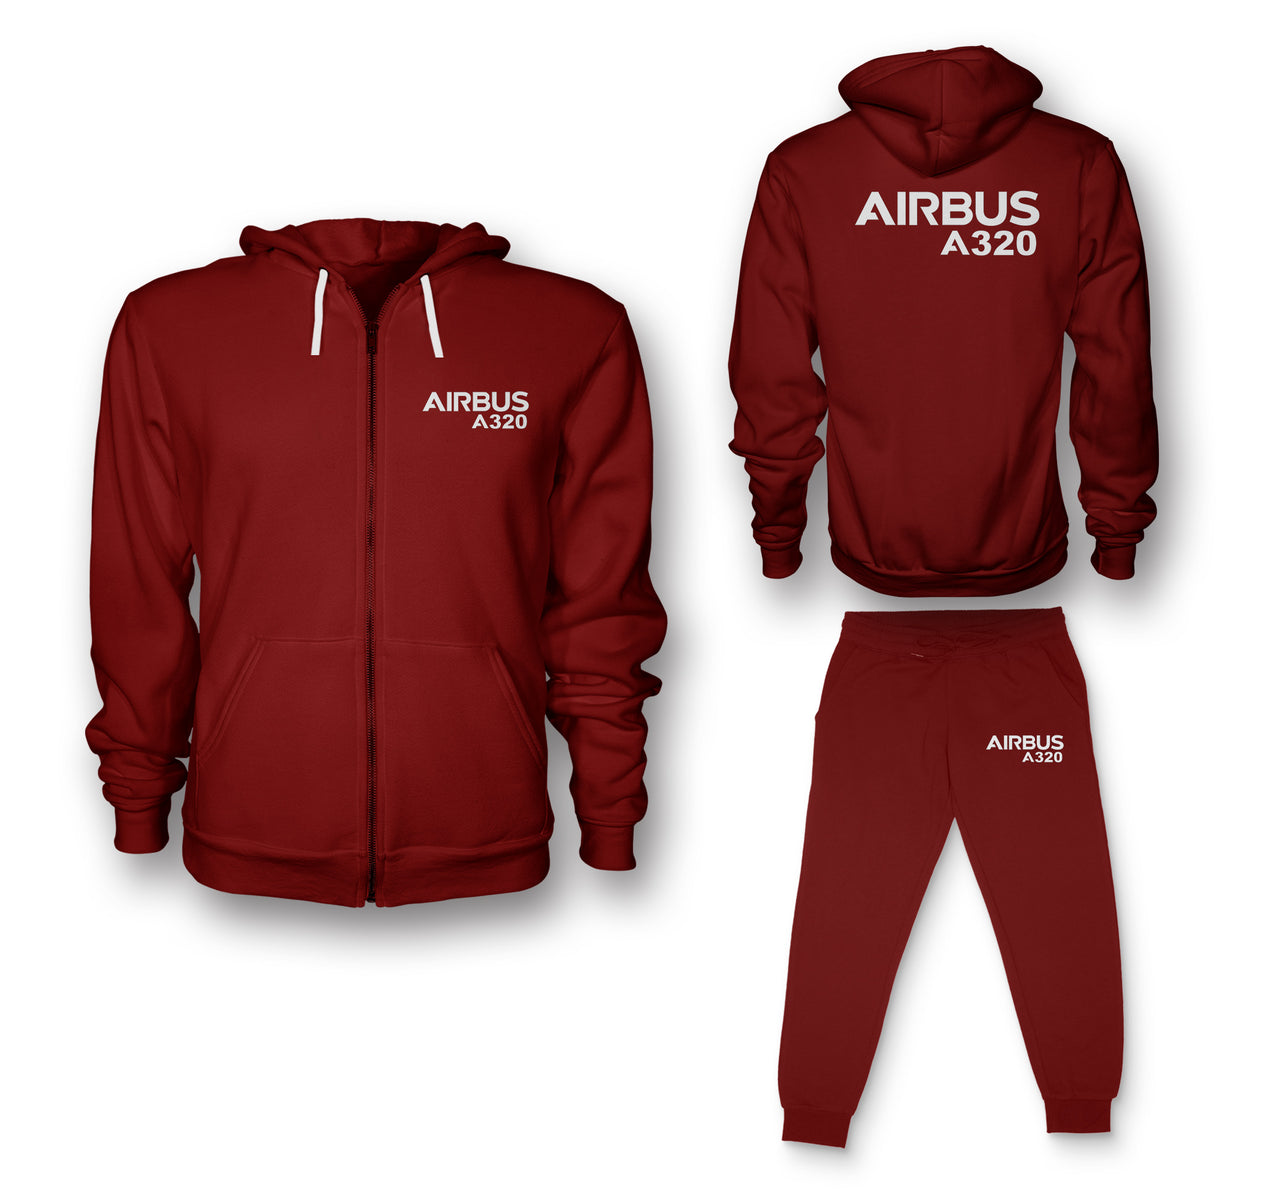 Airbus A320 & Text Designed Zipped Hoodies & Sweatpants Set